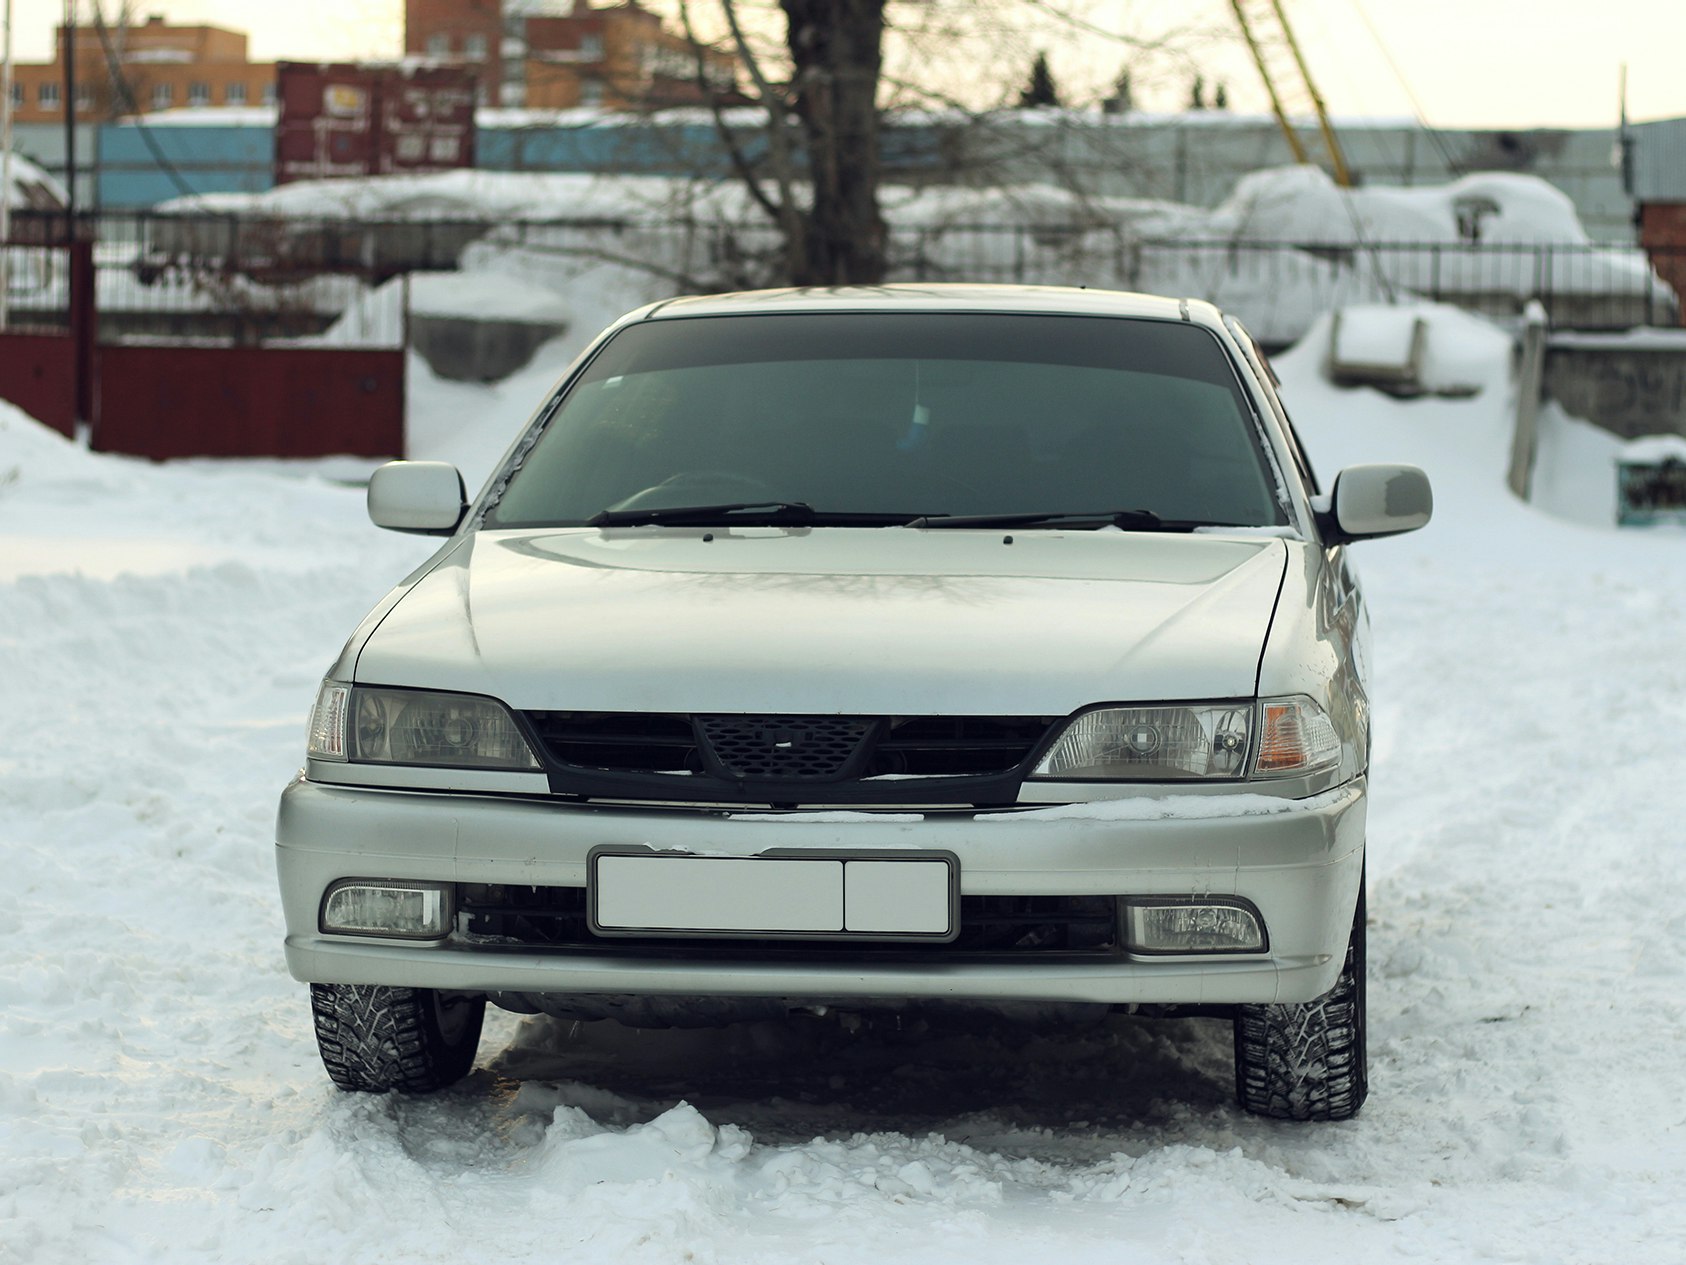 Illustrasjonsfoto av bruktbil parkert foran snødekt industriområde